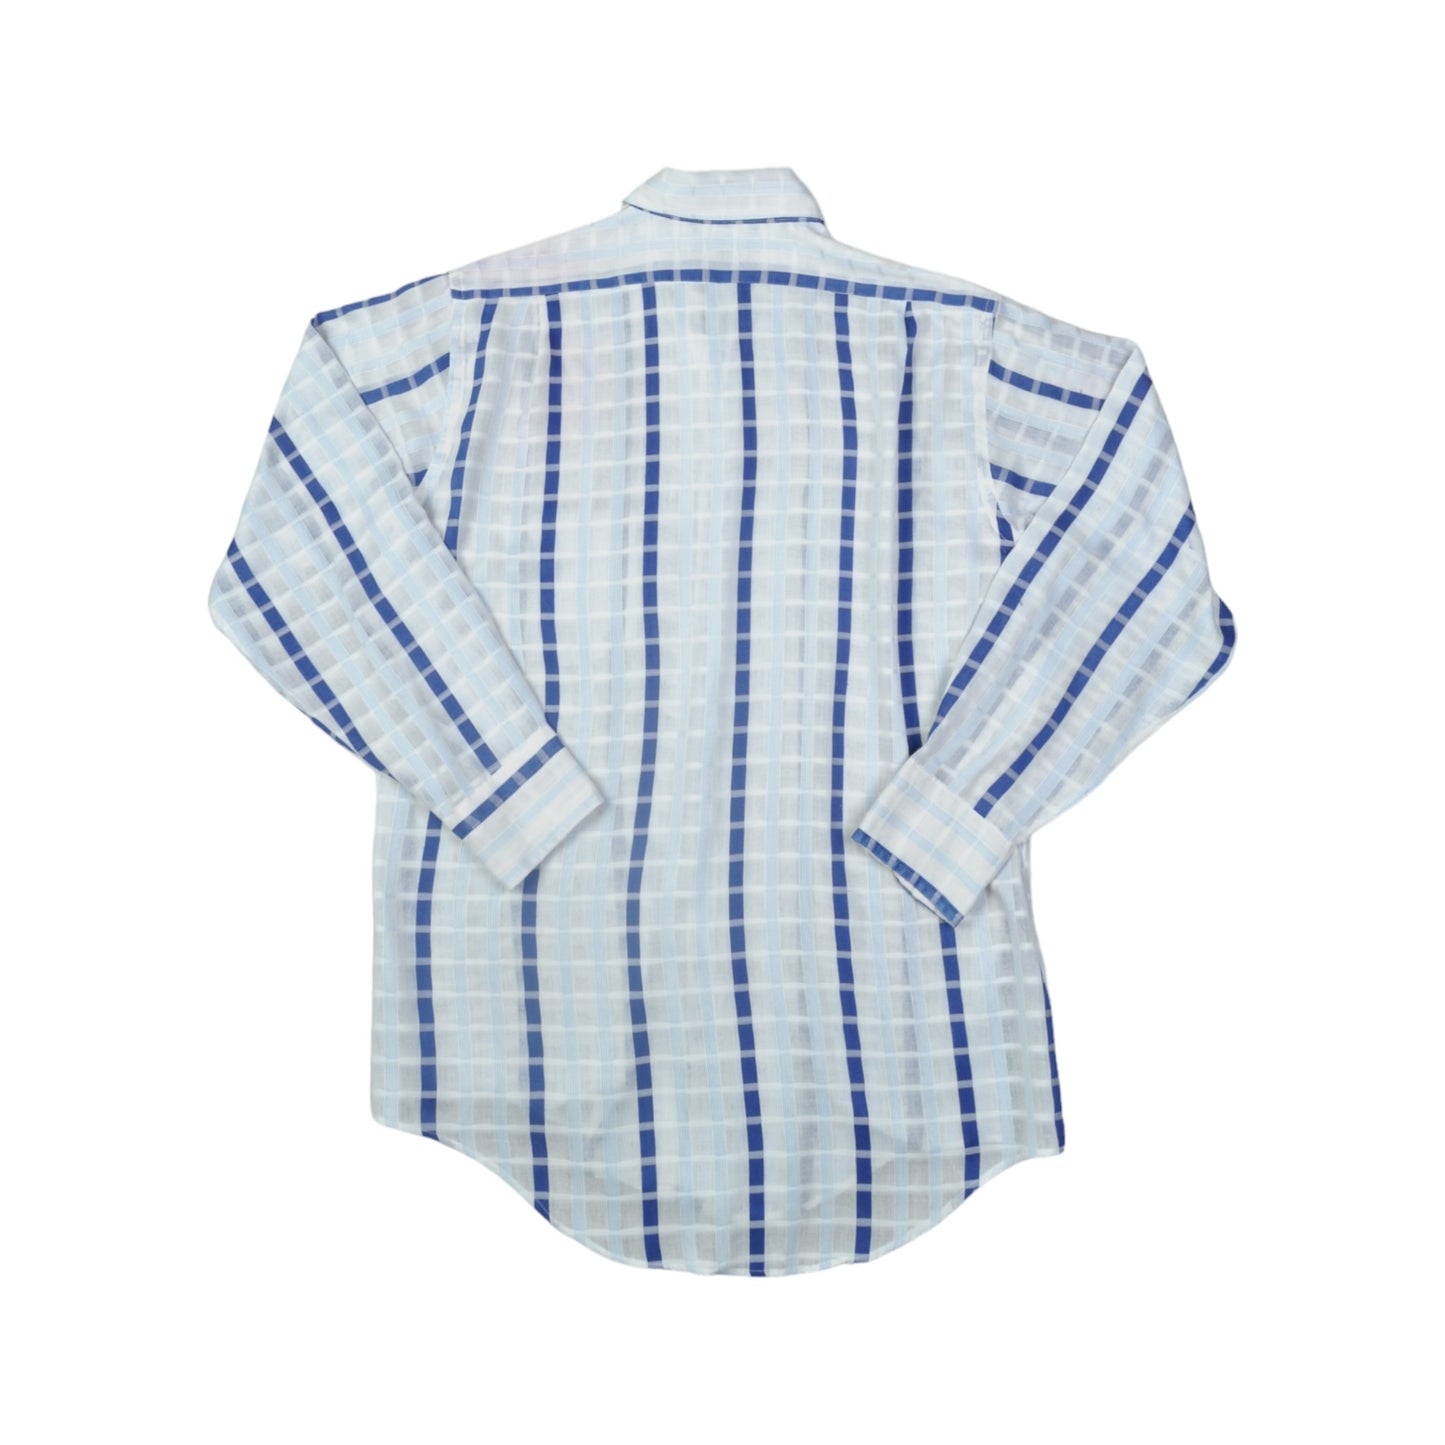 Vintage Shirt 90s Striped Pattern Long Sleeve Blue Medium